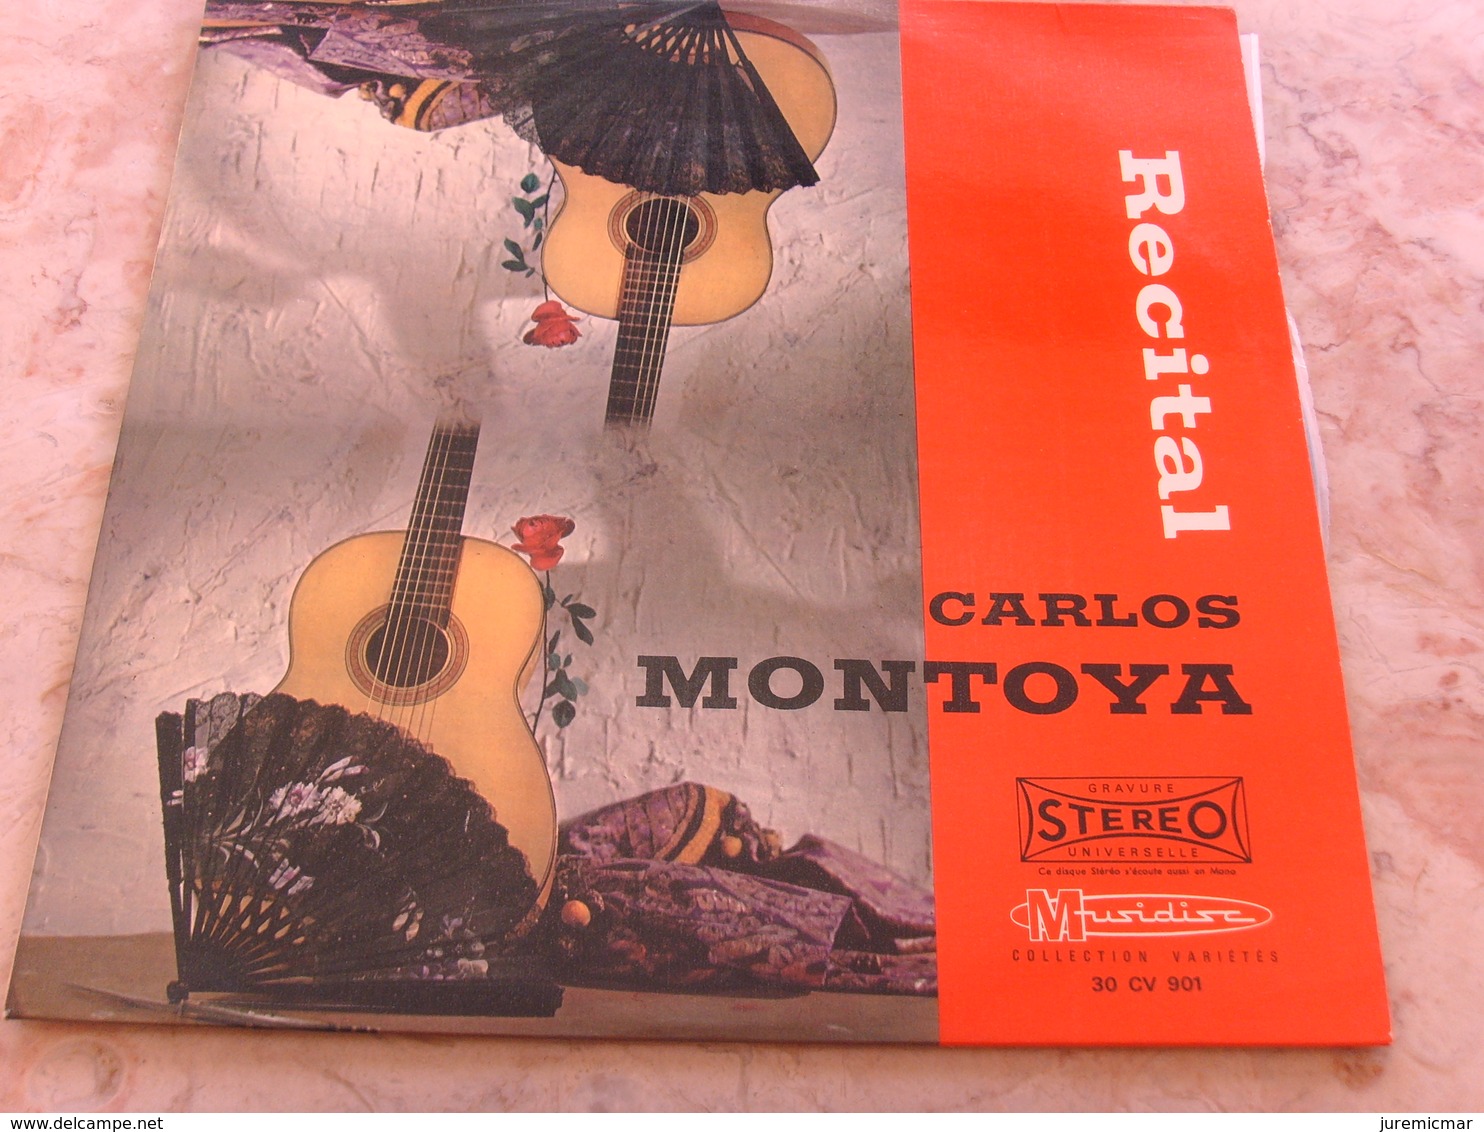 Carlos MONTOYA  Récital Guitare Espagnole - Sonstige - Spanische Musik